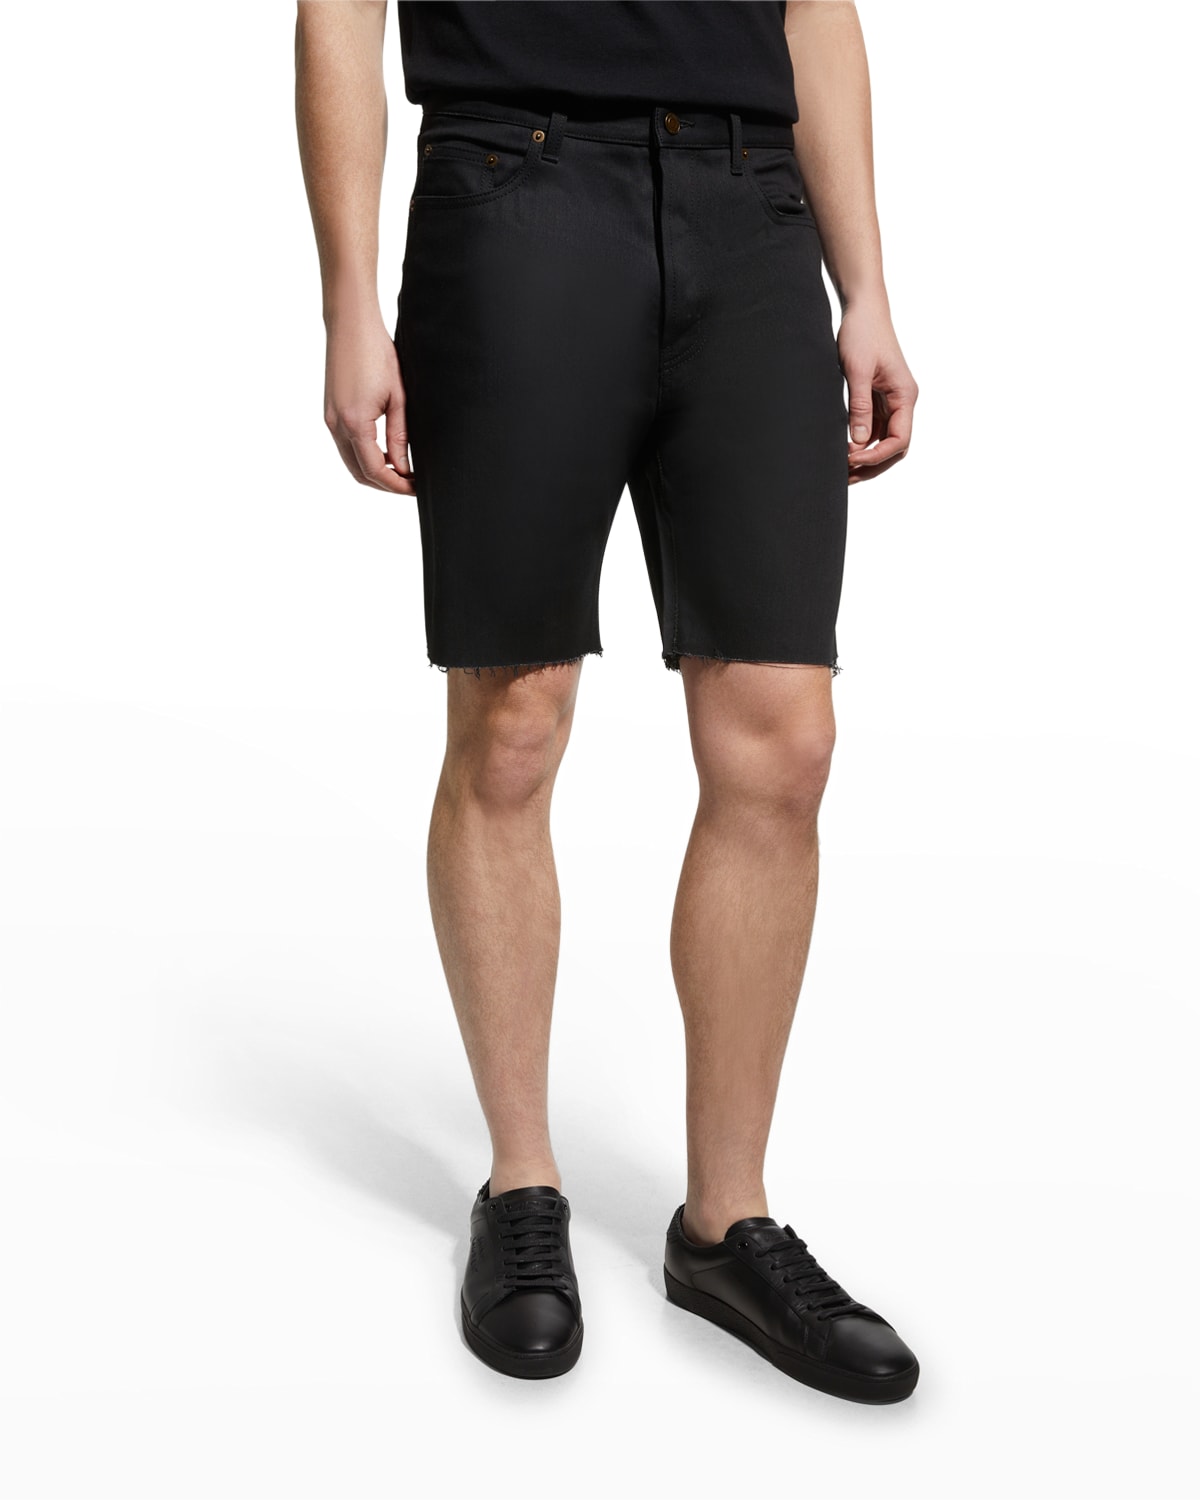 Saint Laurent Men's Frayed Denim Shorts